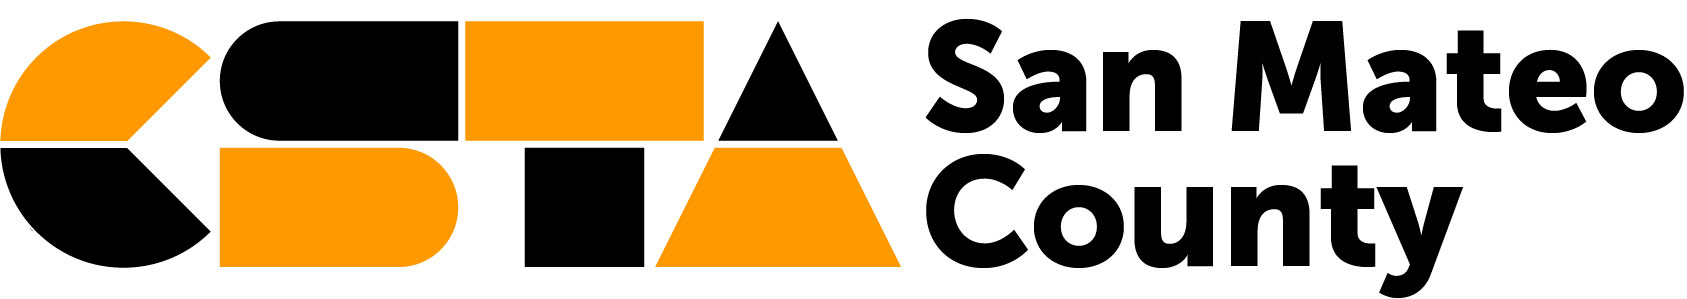 CSTA San Mateo County logo